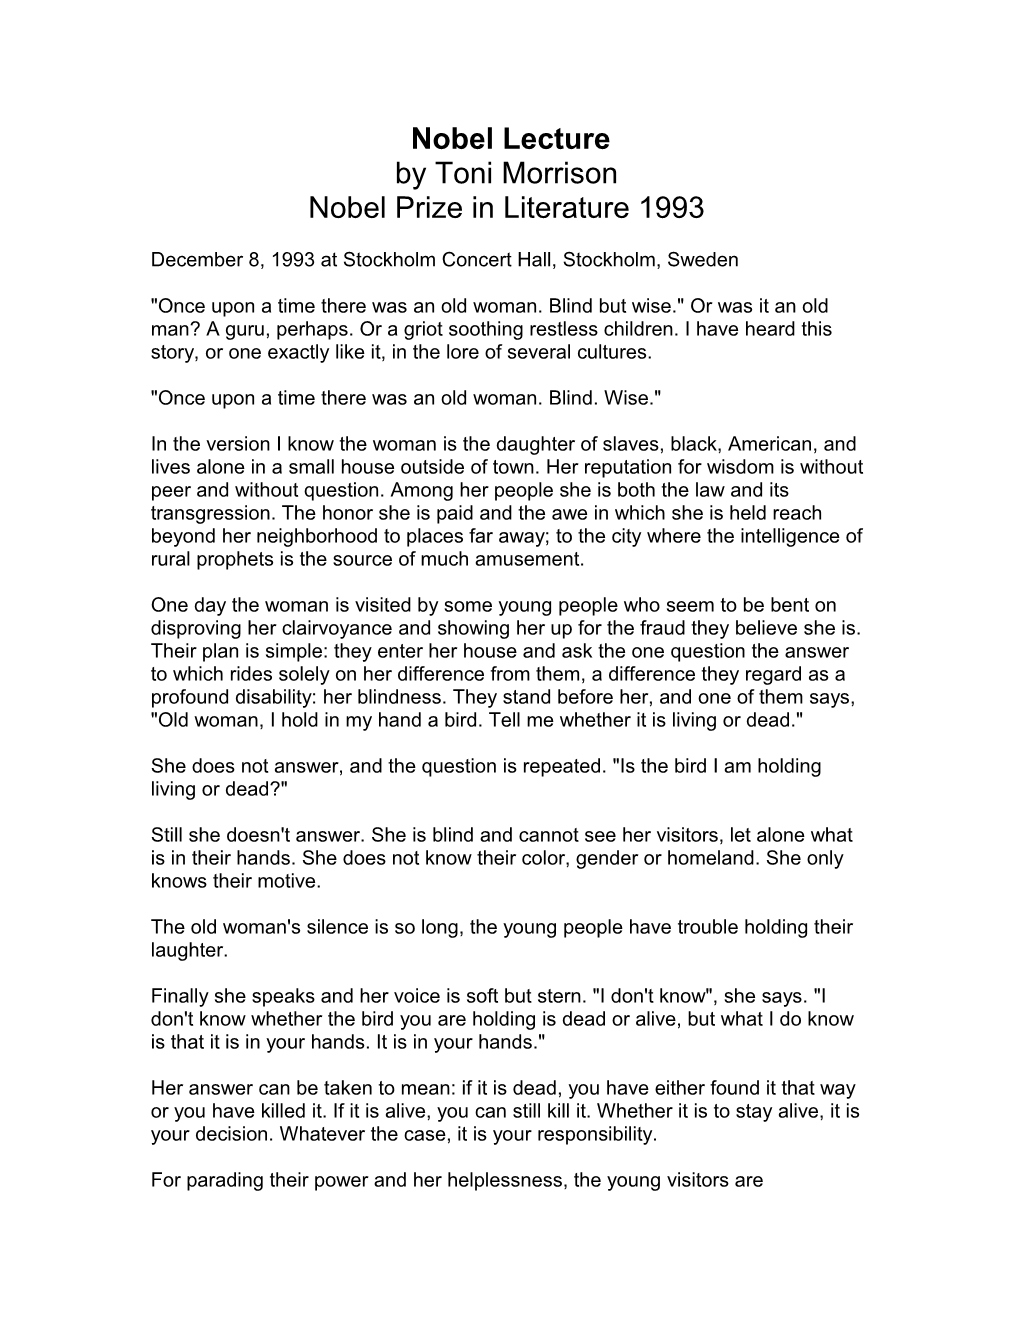 Nobel Lecture by Toni Morrison Nobel Prize in Literature 1993